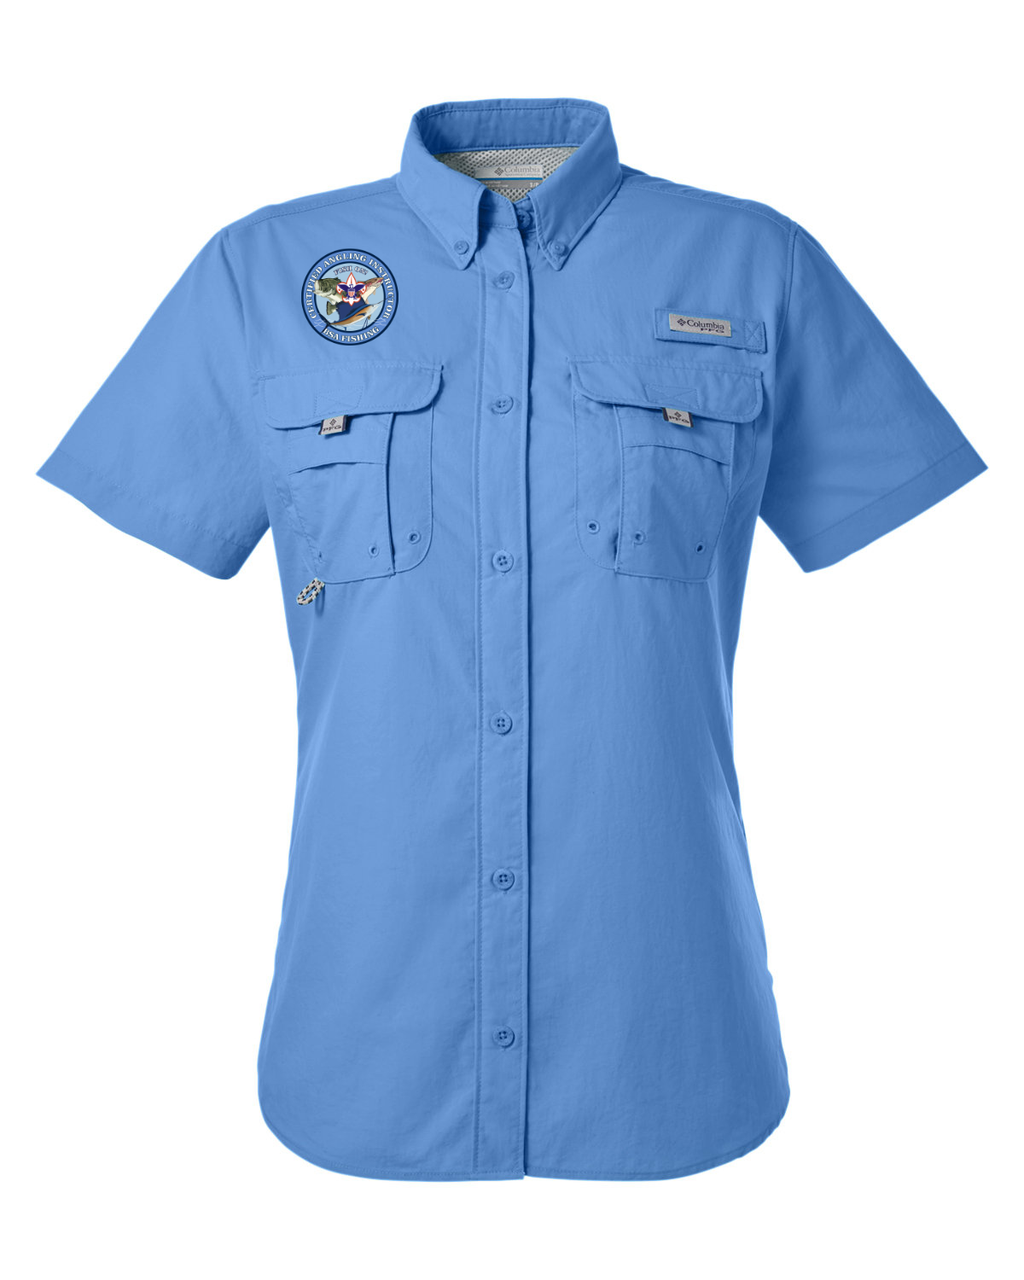 Ladies Columbia Blue Fishing Shirt